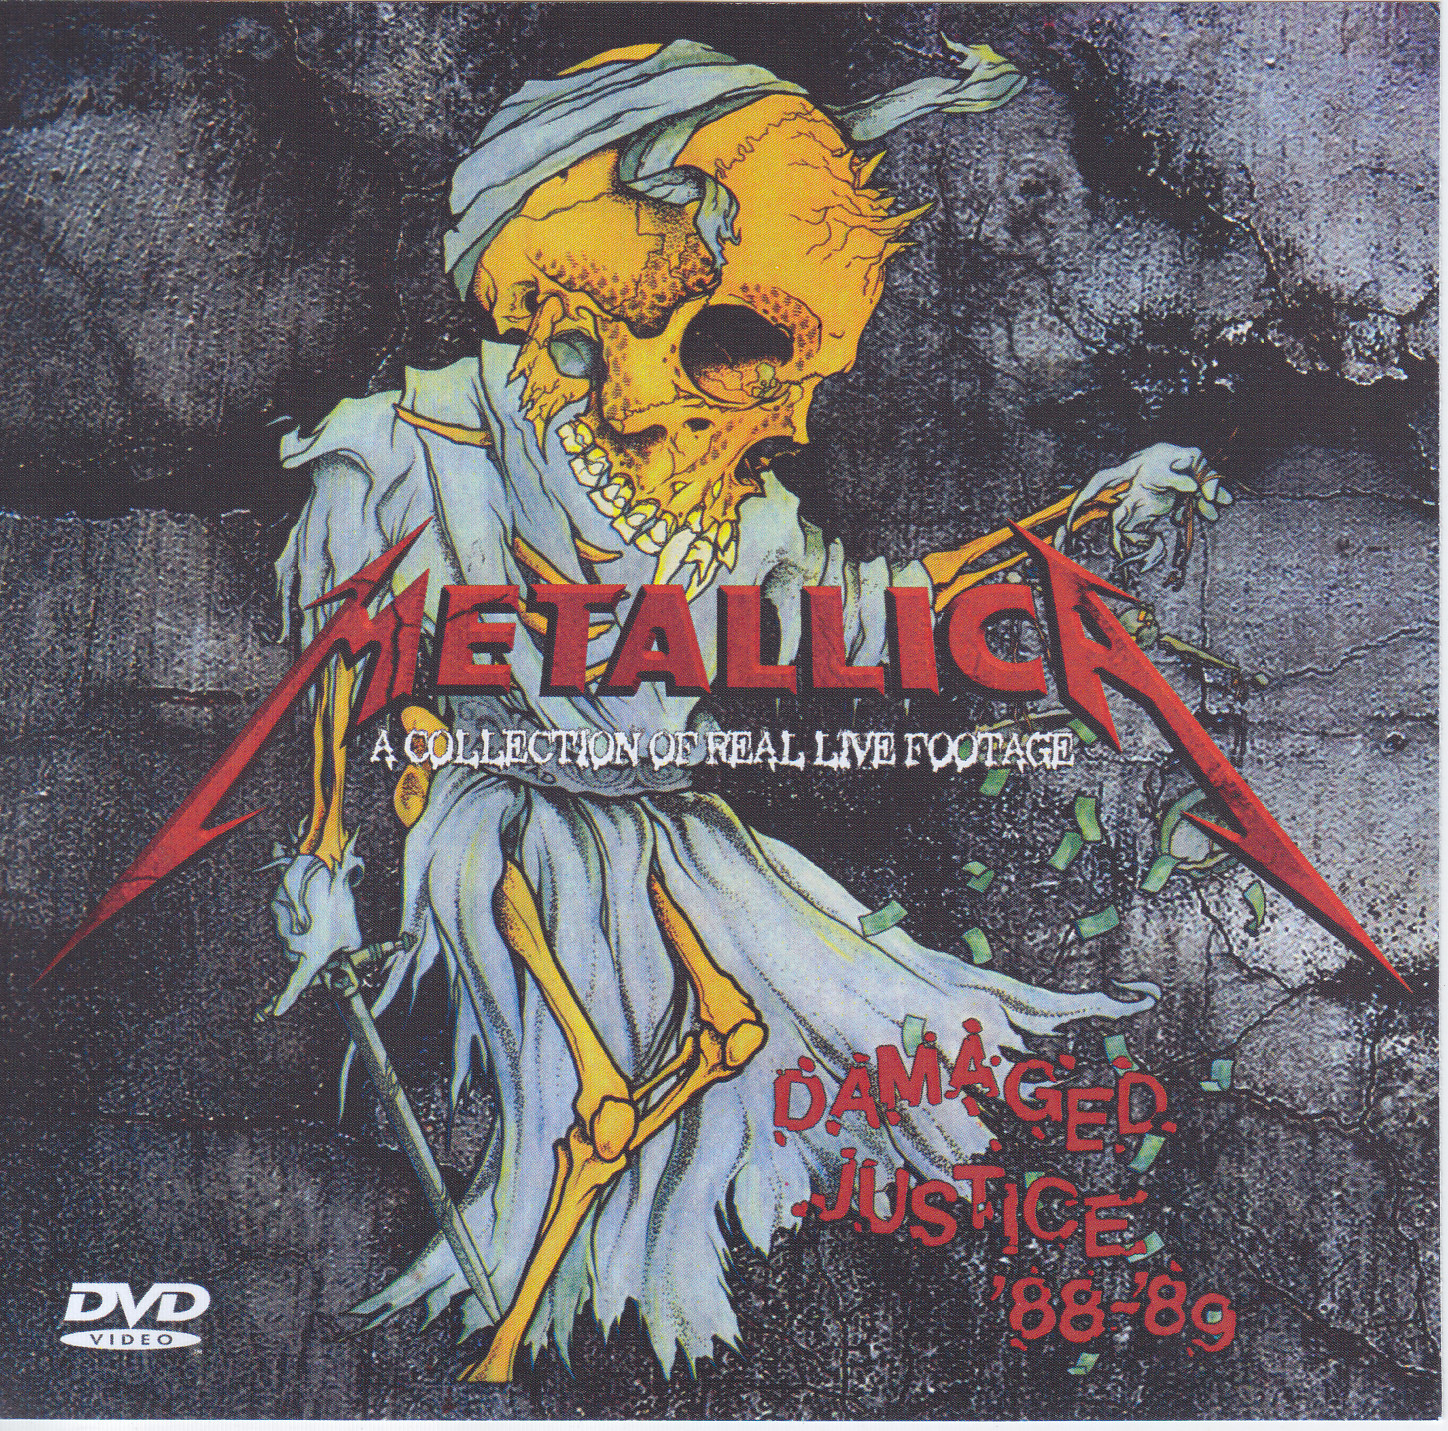 Metallica / Damaged Justice 88-89 / 1DVDR – GiGinJapan